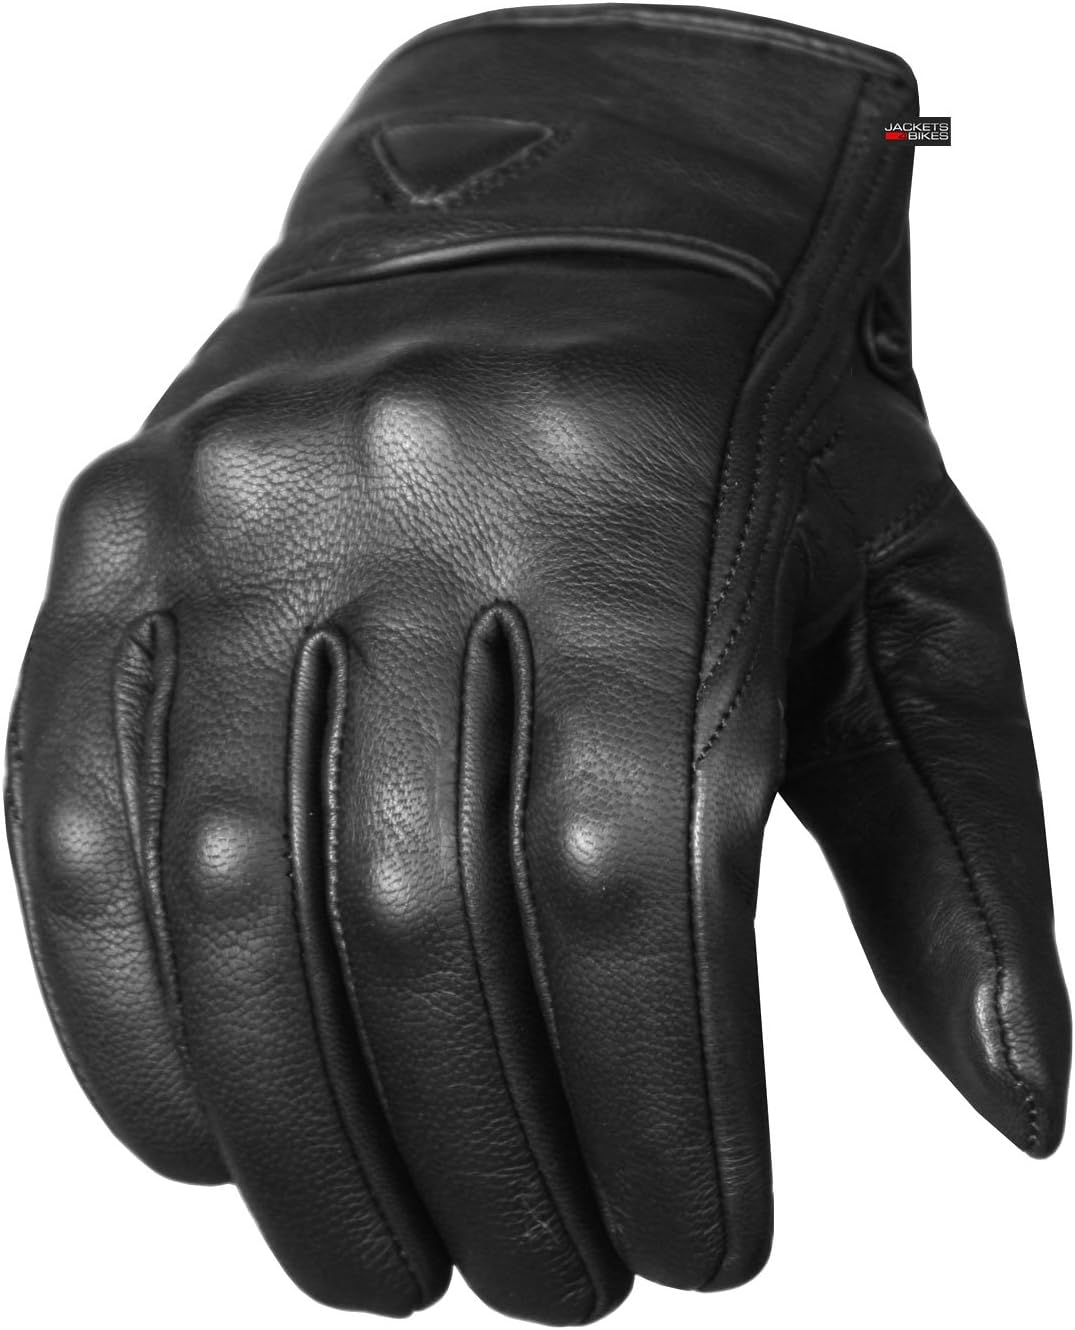 Jackets 4 Bikes Men’s Premium Leather Street Motorcycle Protective Cruiser Biker Gel Gloves